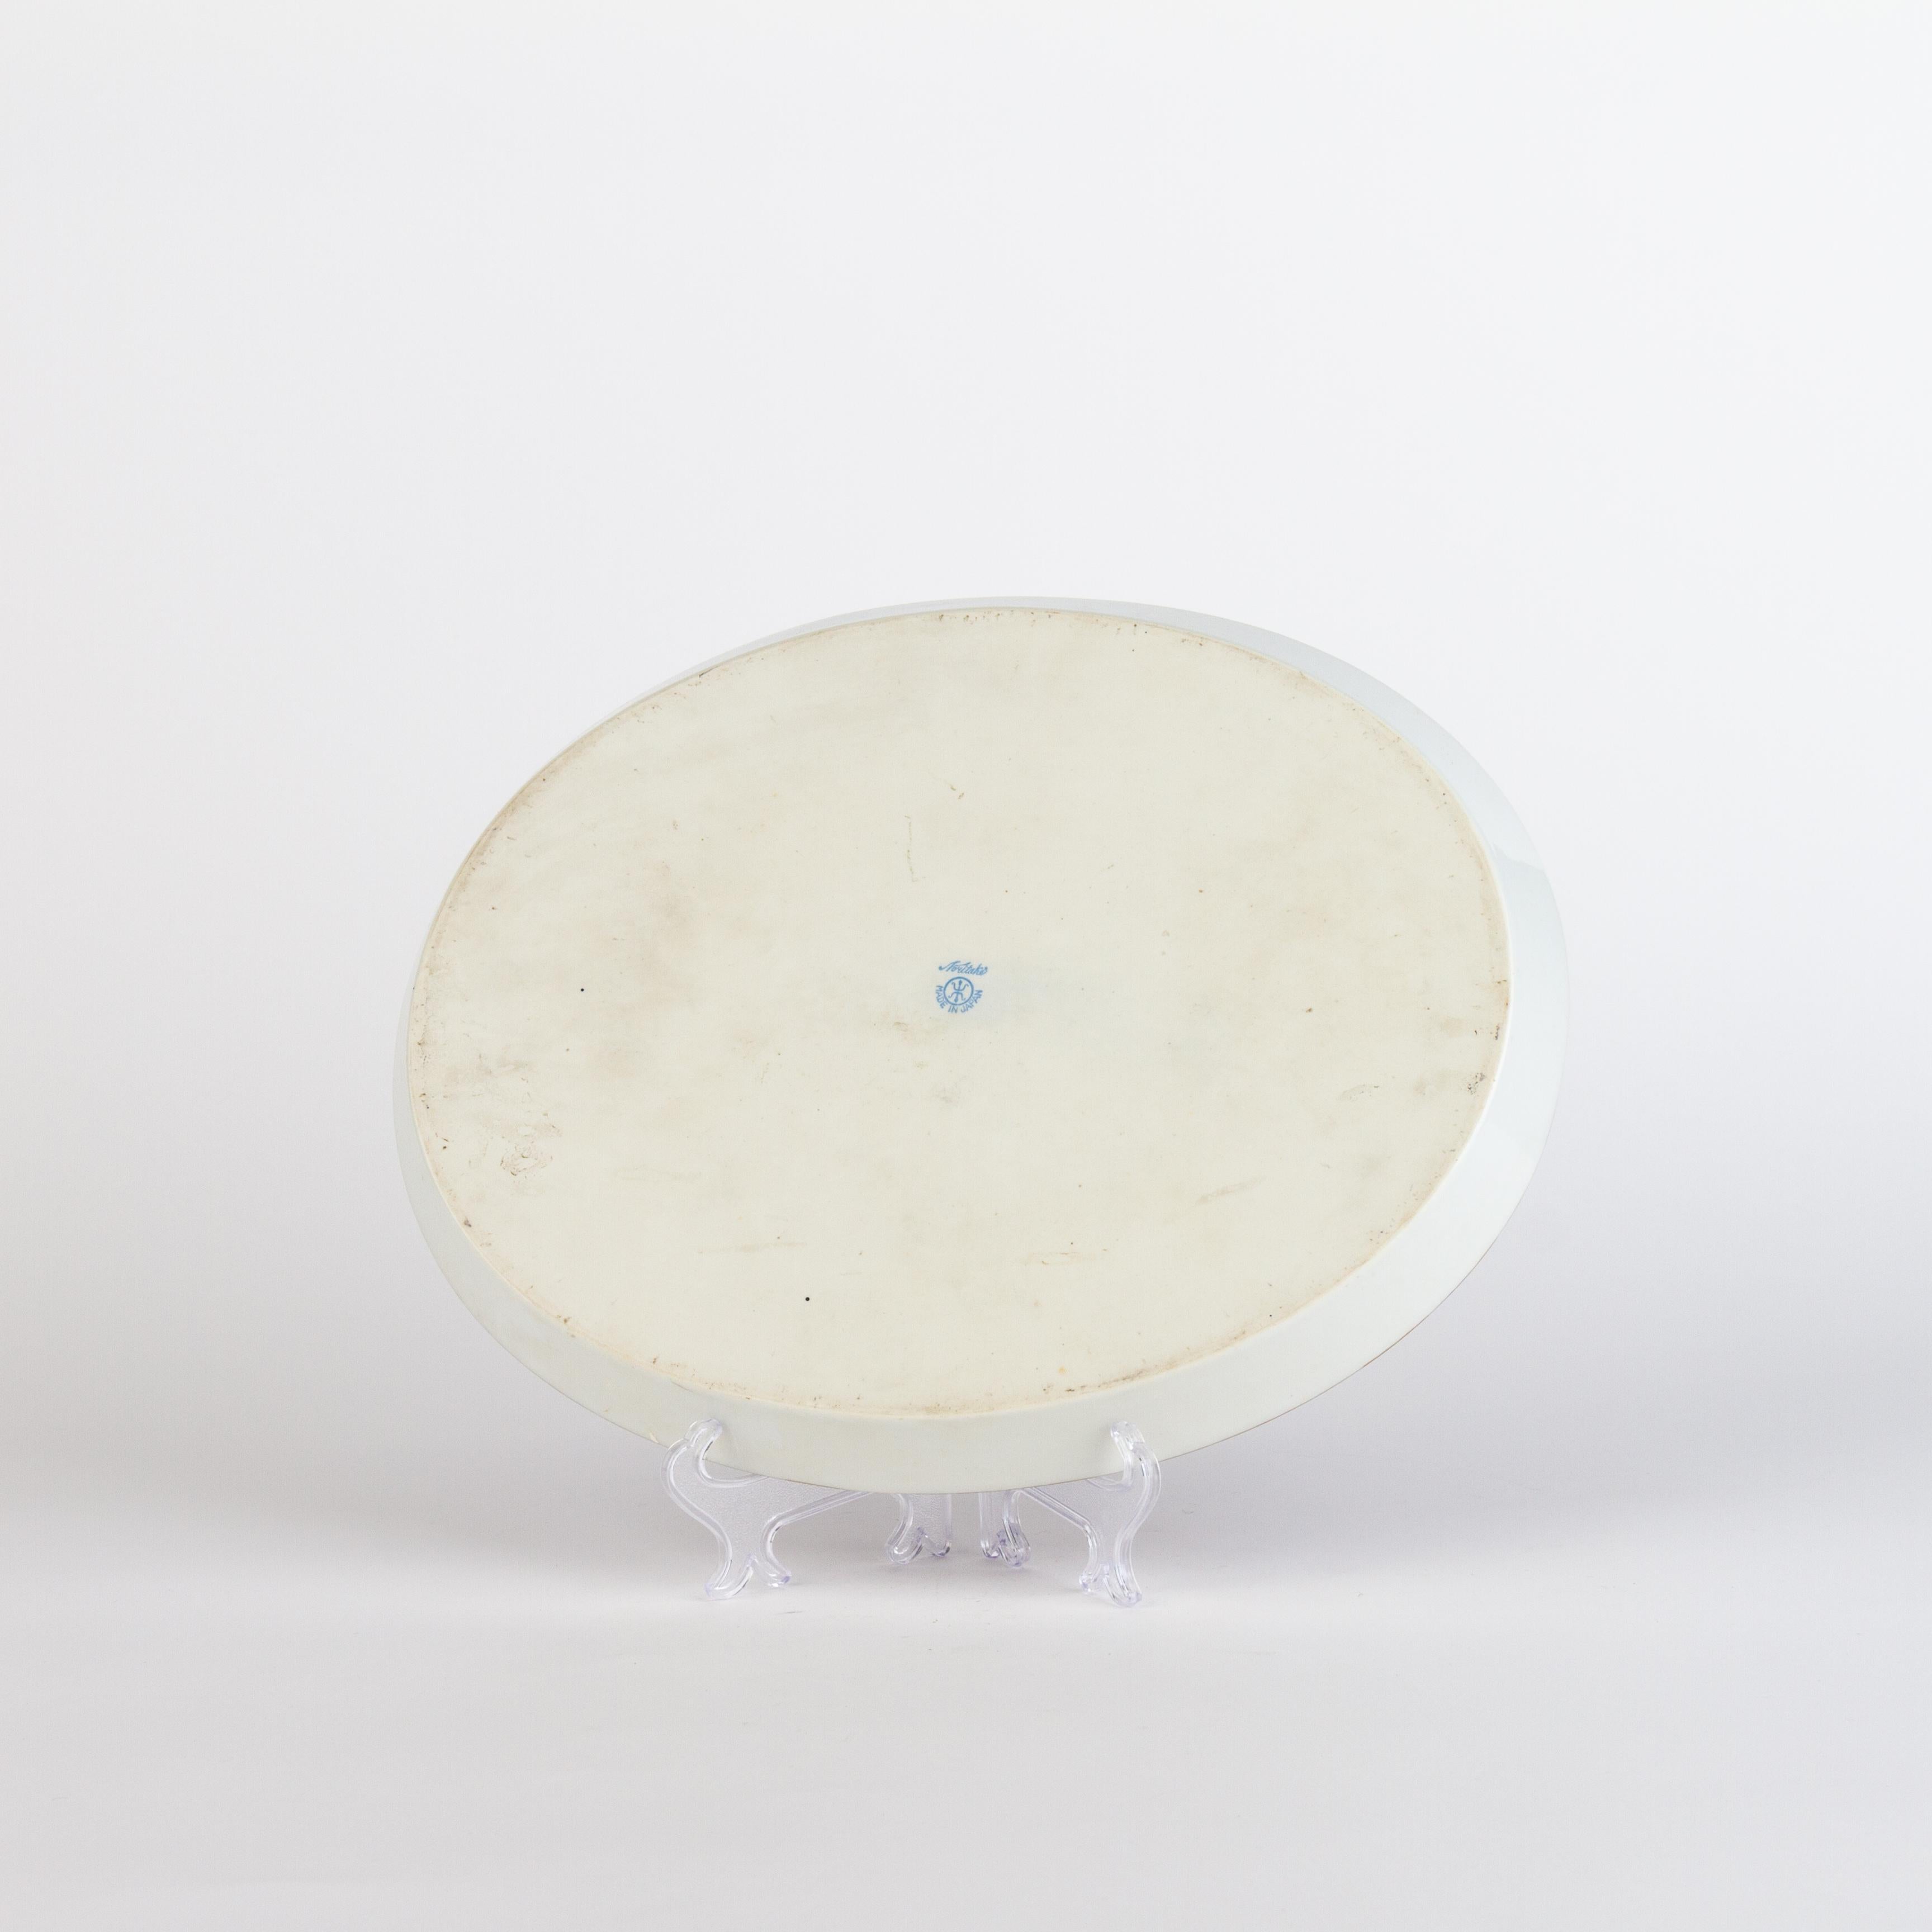 Noritake Japanese Art Deco Porcelain Oval Tray Plate 2